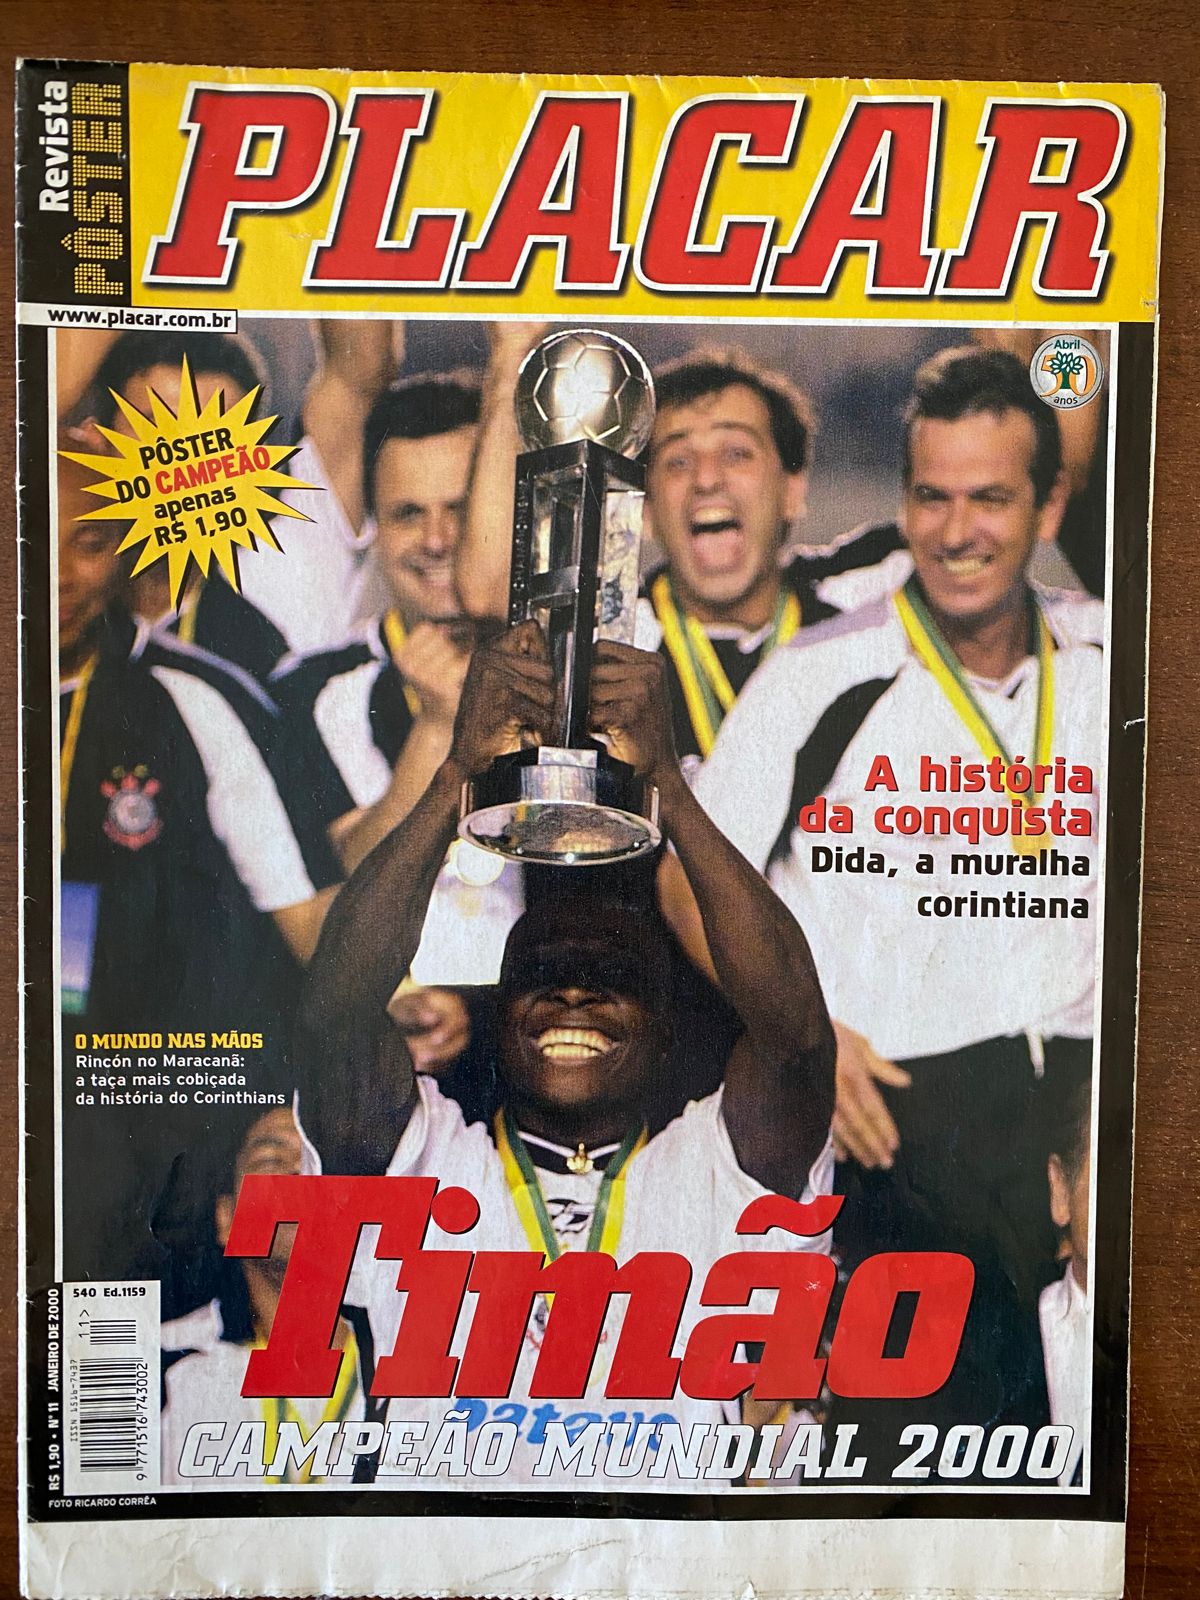 Corinthians Campeão Mundial 2000 - Poster 30x42cm Mdf